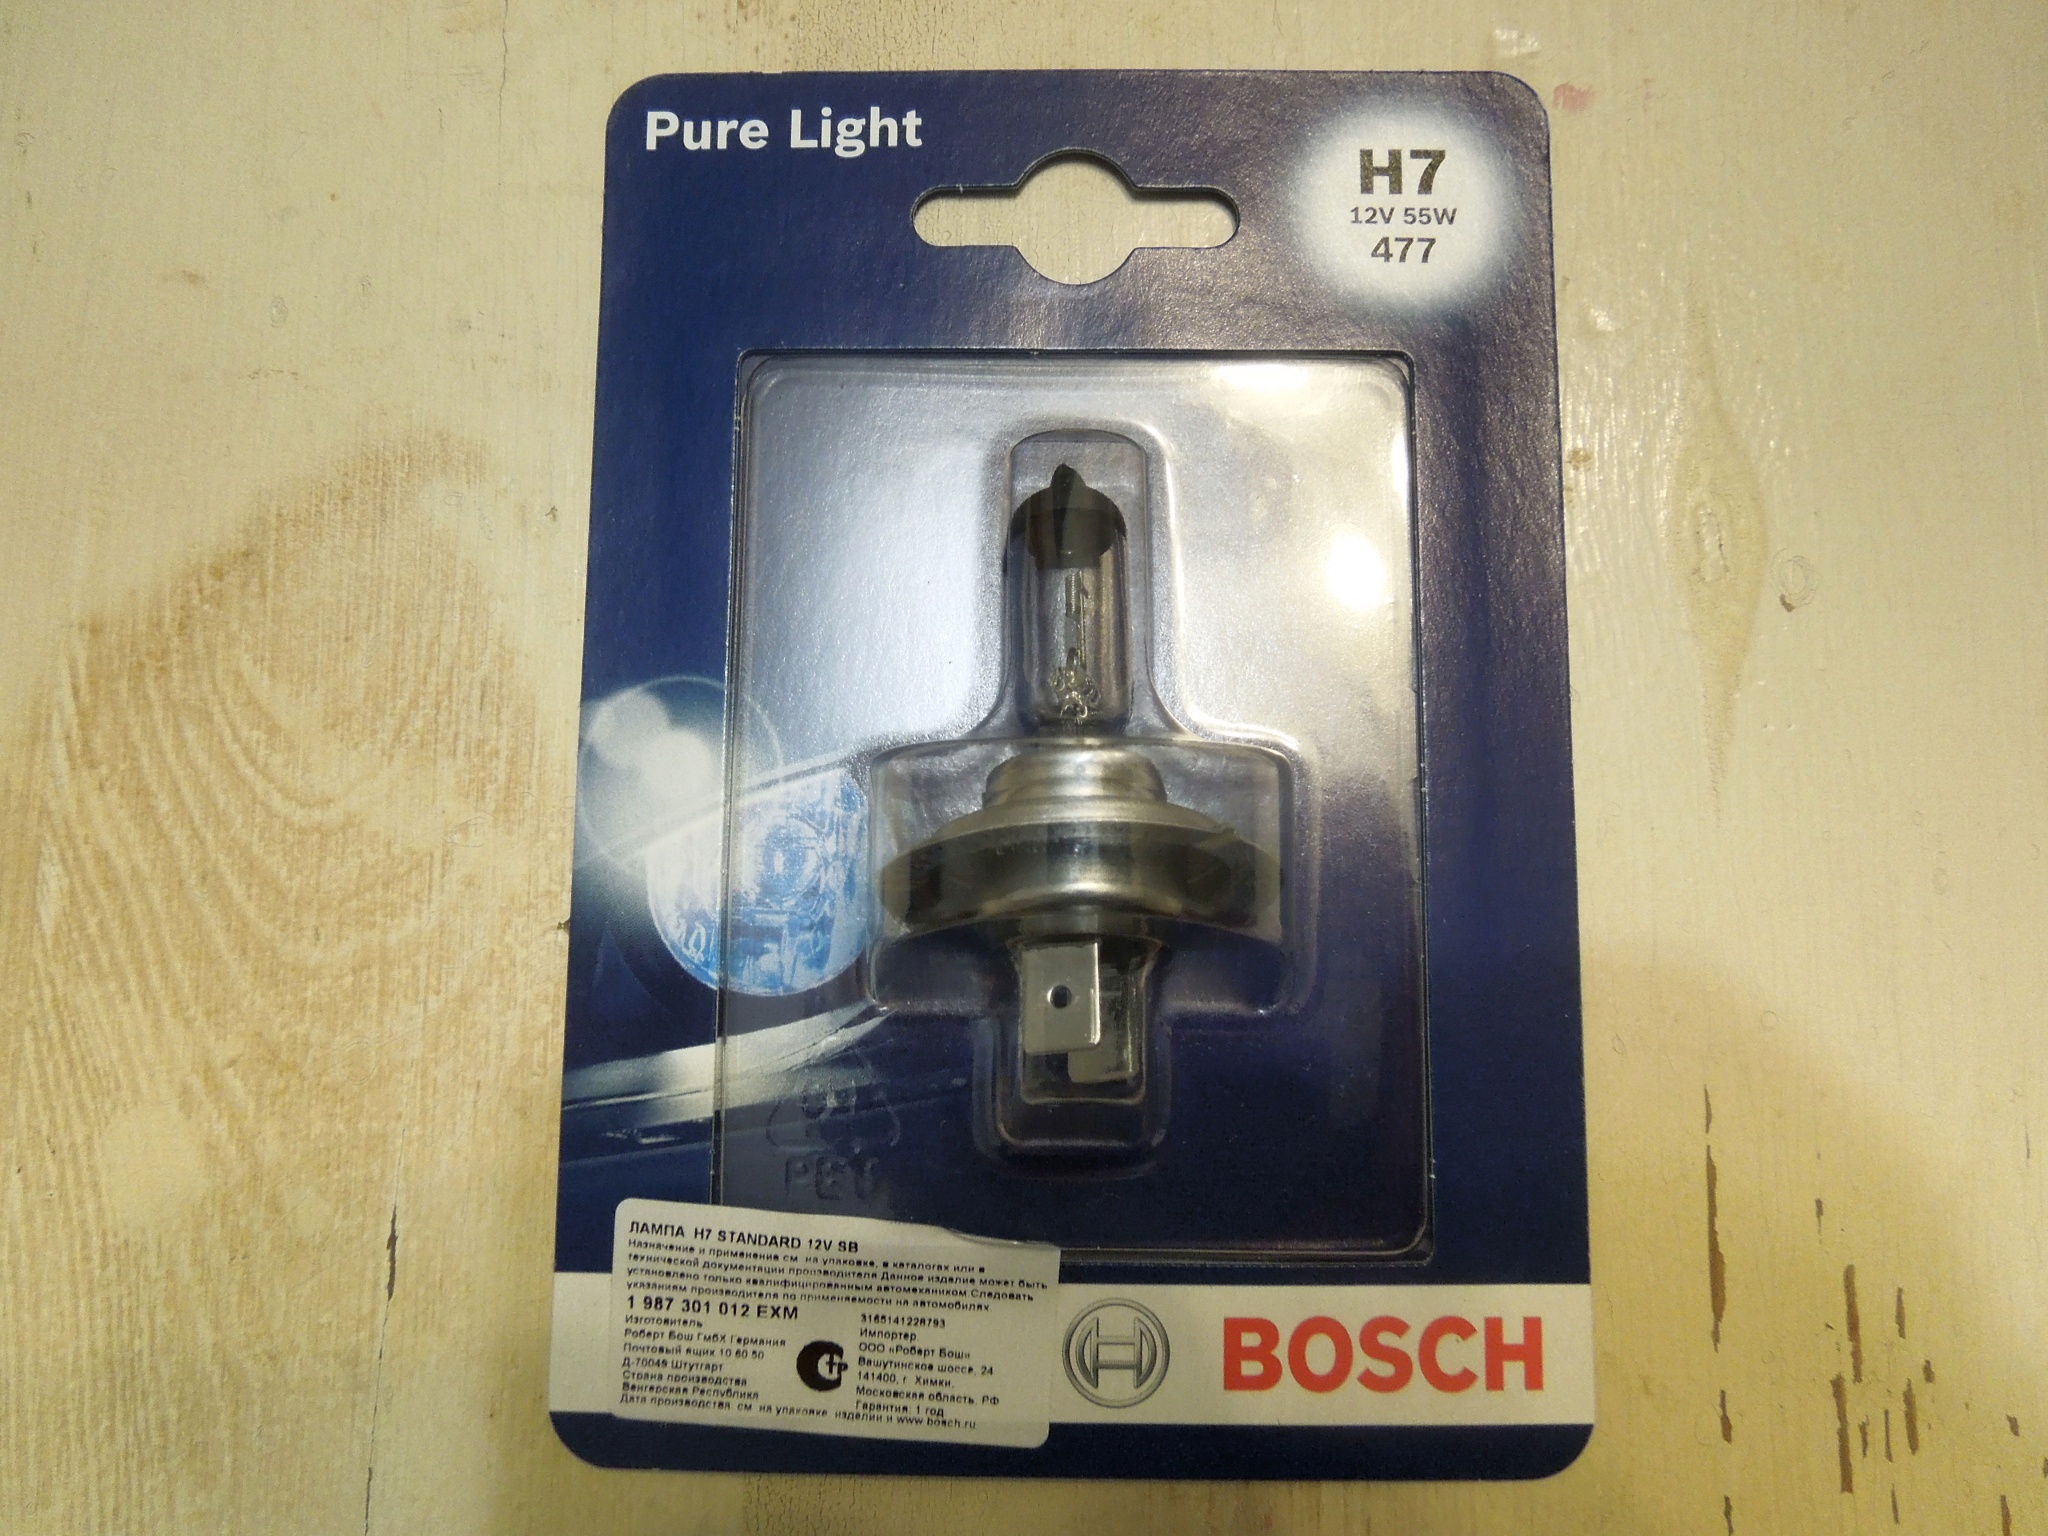 Автолампа Bosch Pure Light H7 (1 987 301 012) – фото, отзывы